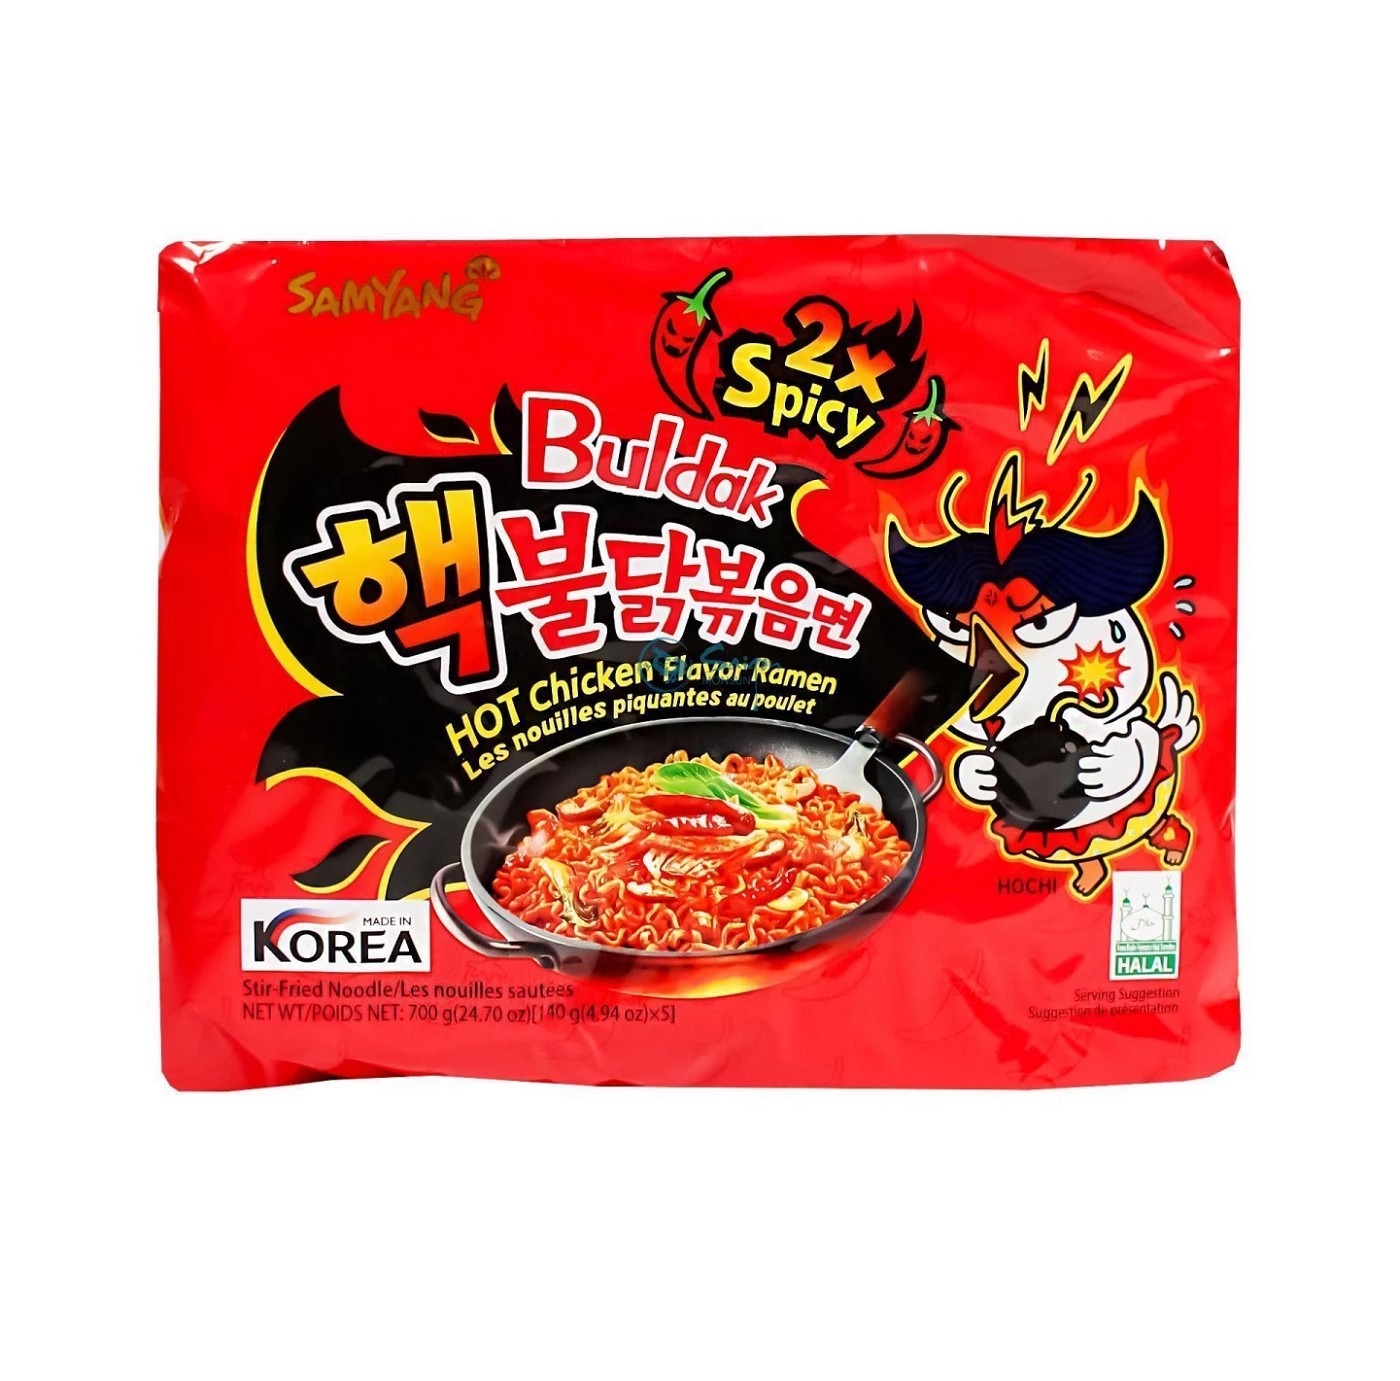 Samyang Buldak 2xSpicy Hot Chicken Flavor Ramen 5x140g